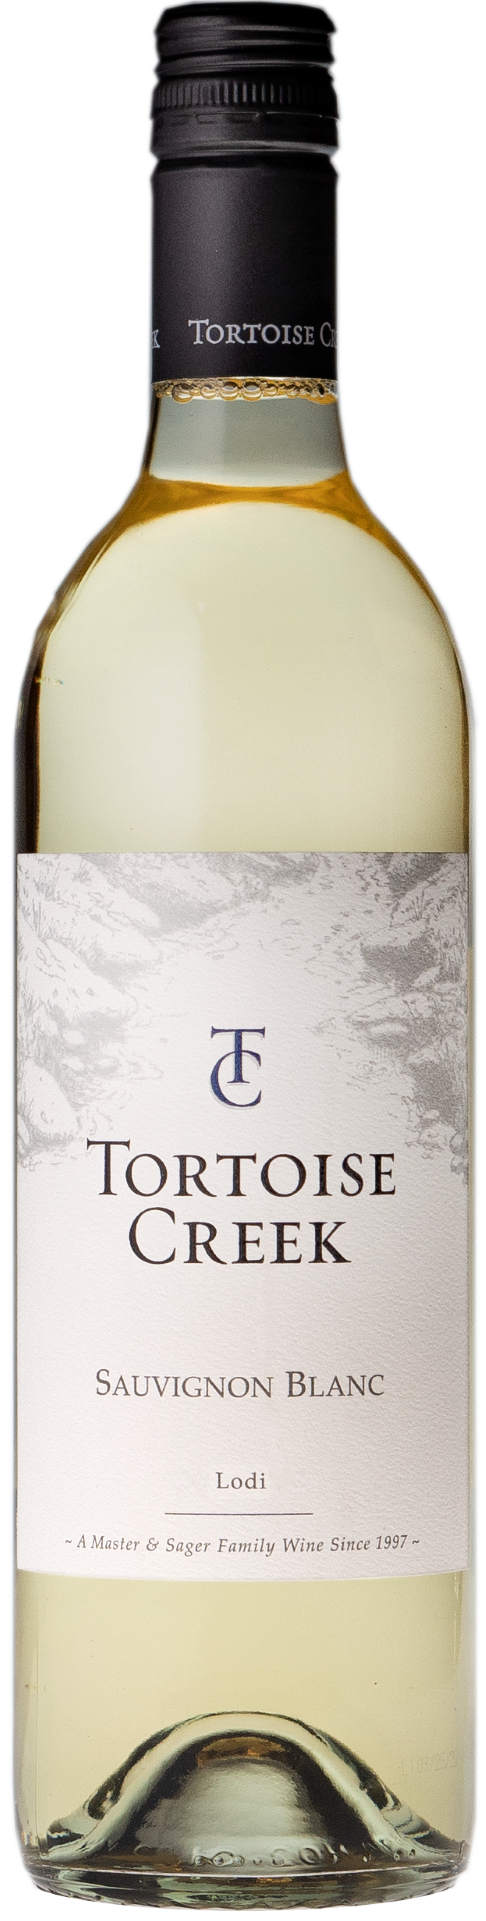 Tortoise Creek - Winesellers, Ltd.